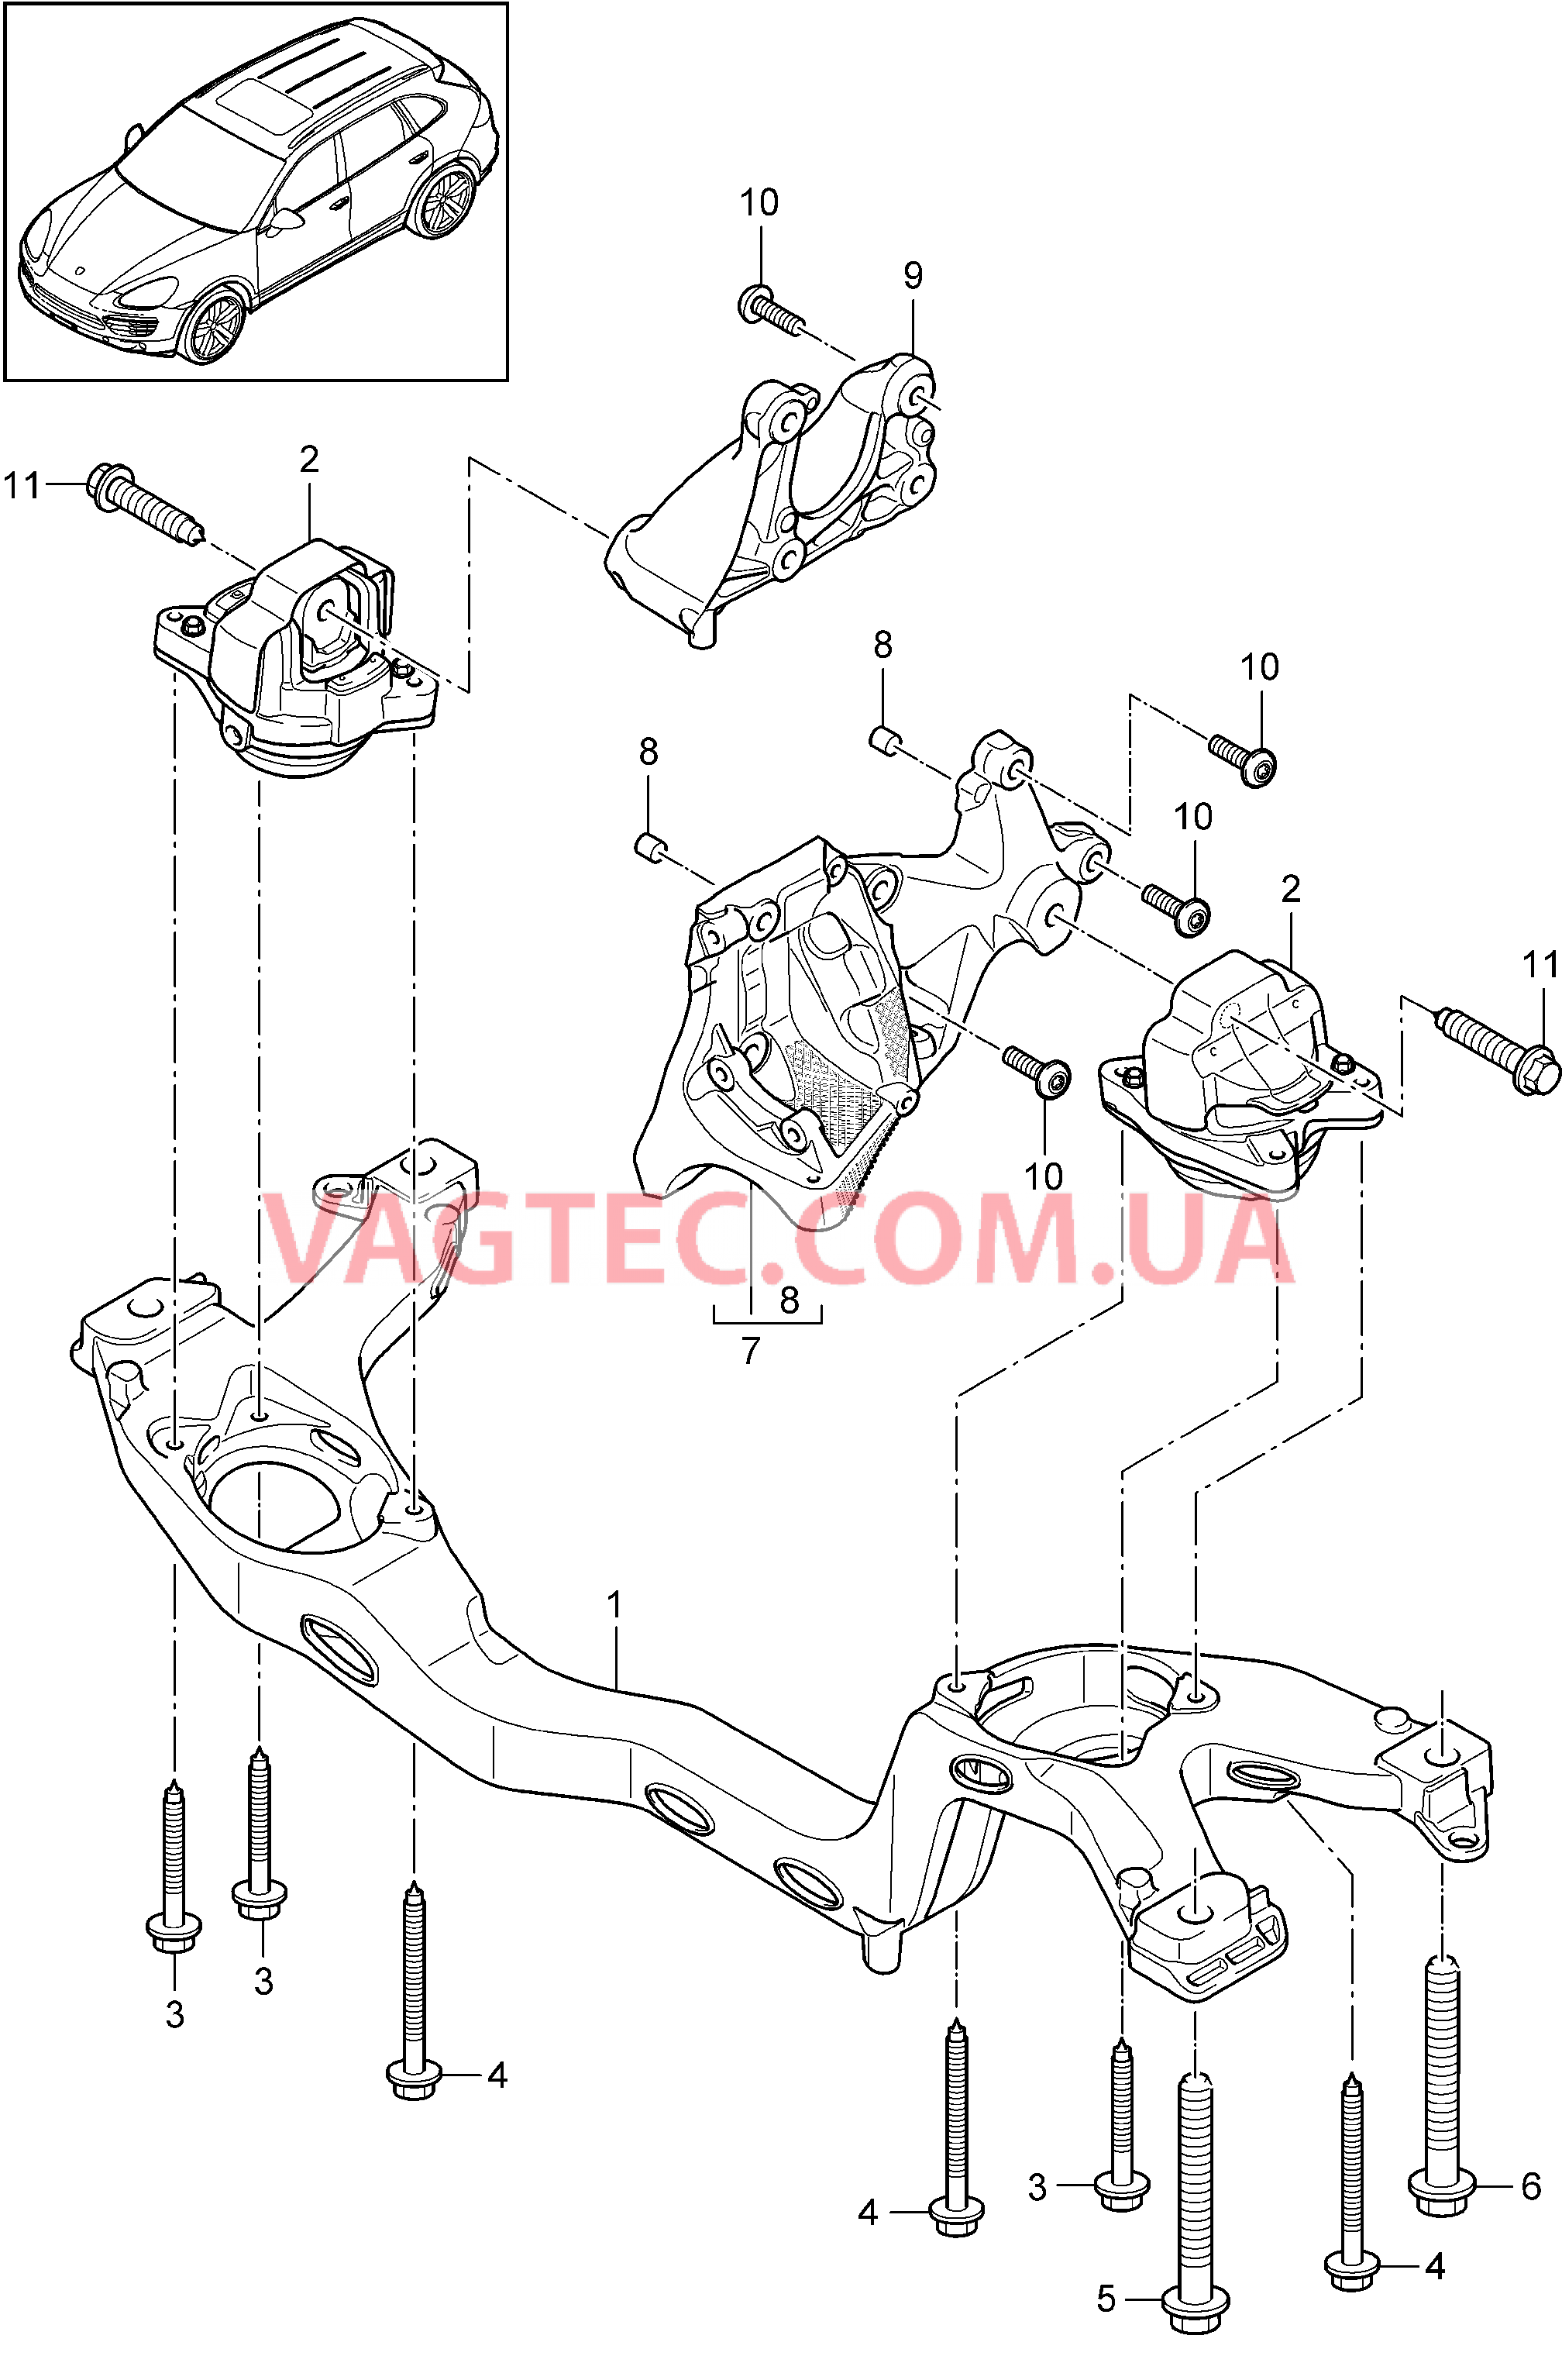 109-012 Подвеска двигателя, нижний
						
						MCU.RA, MCX.ZA для PORSCHE Cayenne 2011-2018